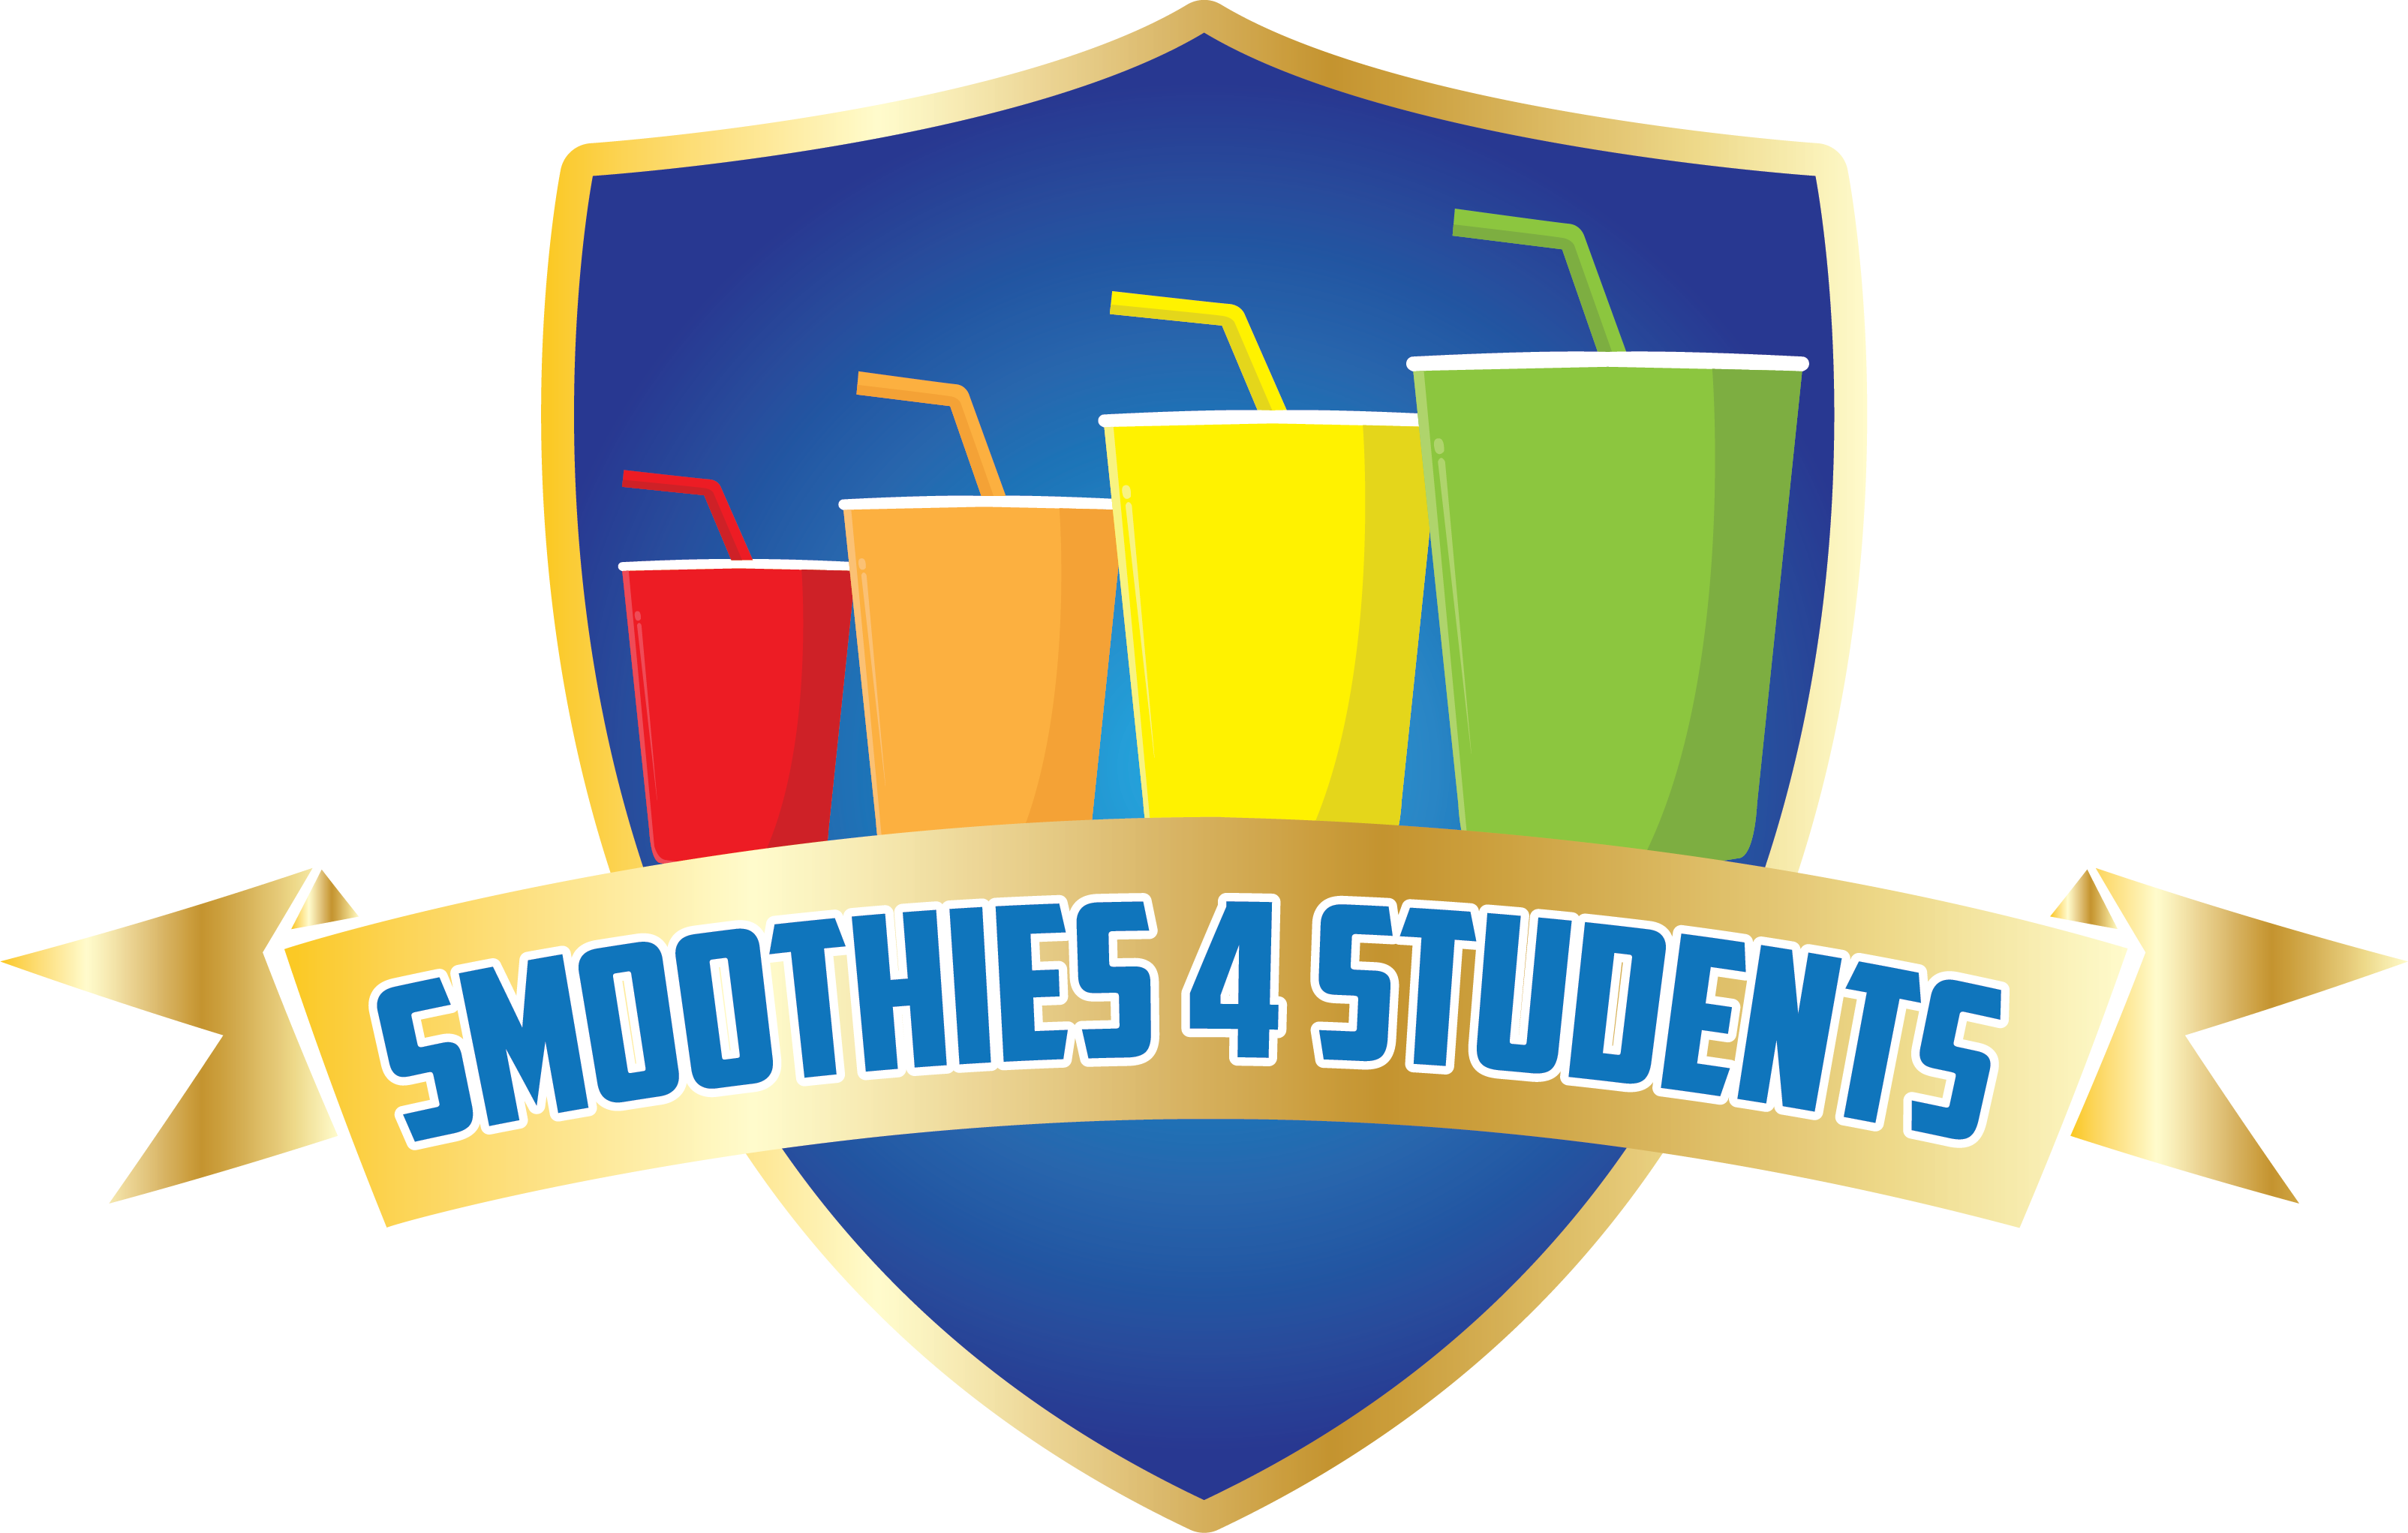 Smoothies 4 Students logo